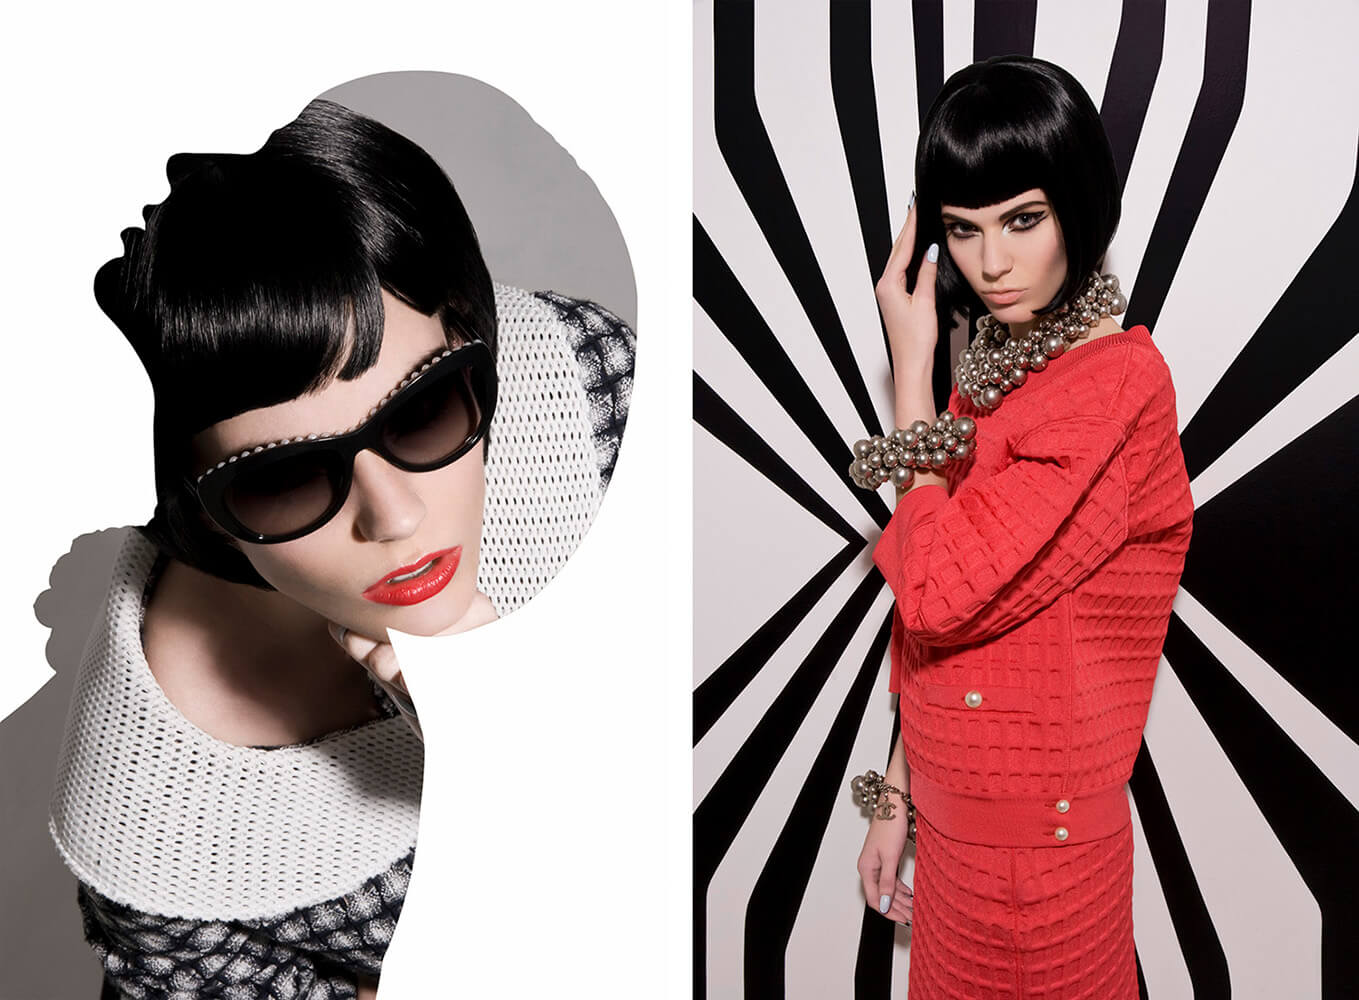 Angel-Ruiz-Ruiz-Fashion-Photographer-editorial-Chanel-Spring-Summer-2013-red-Dress-B&W-jacket-1359x1000